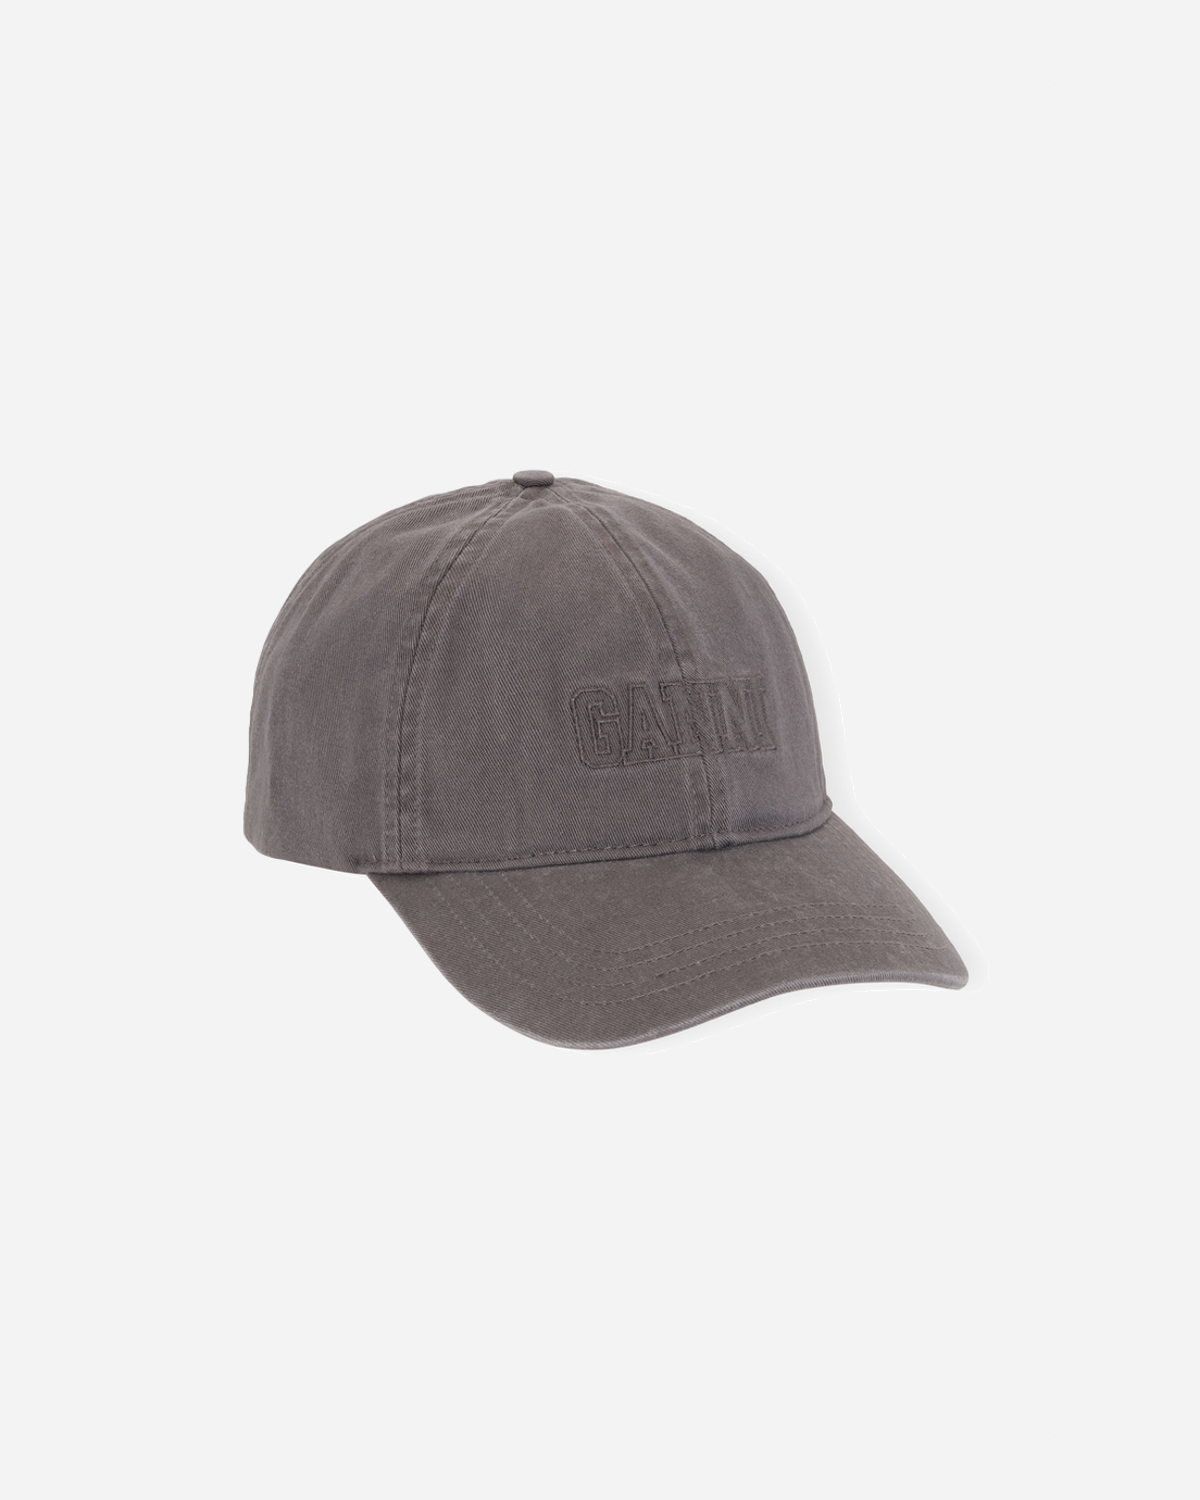 Cap Hat - Frost Gray